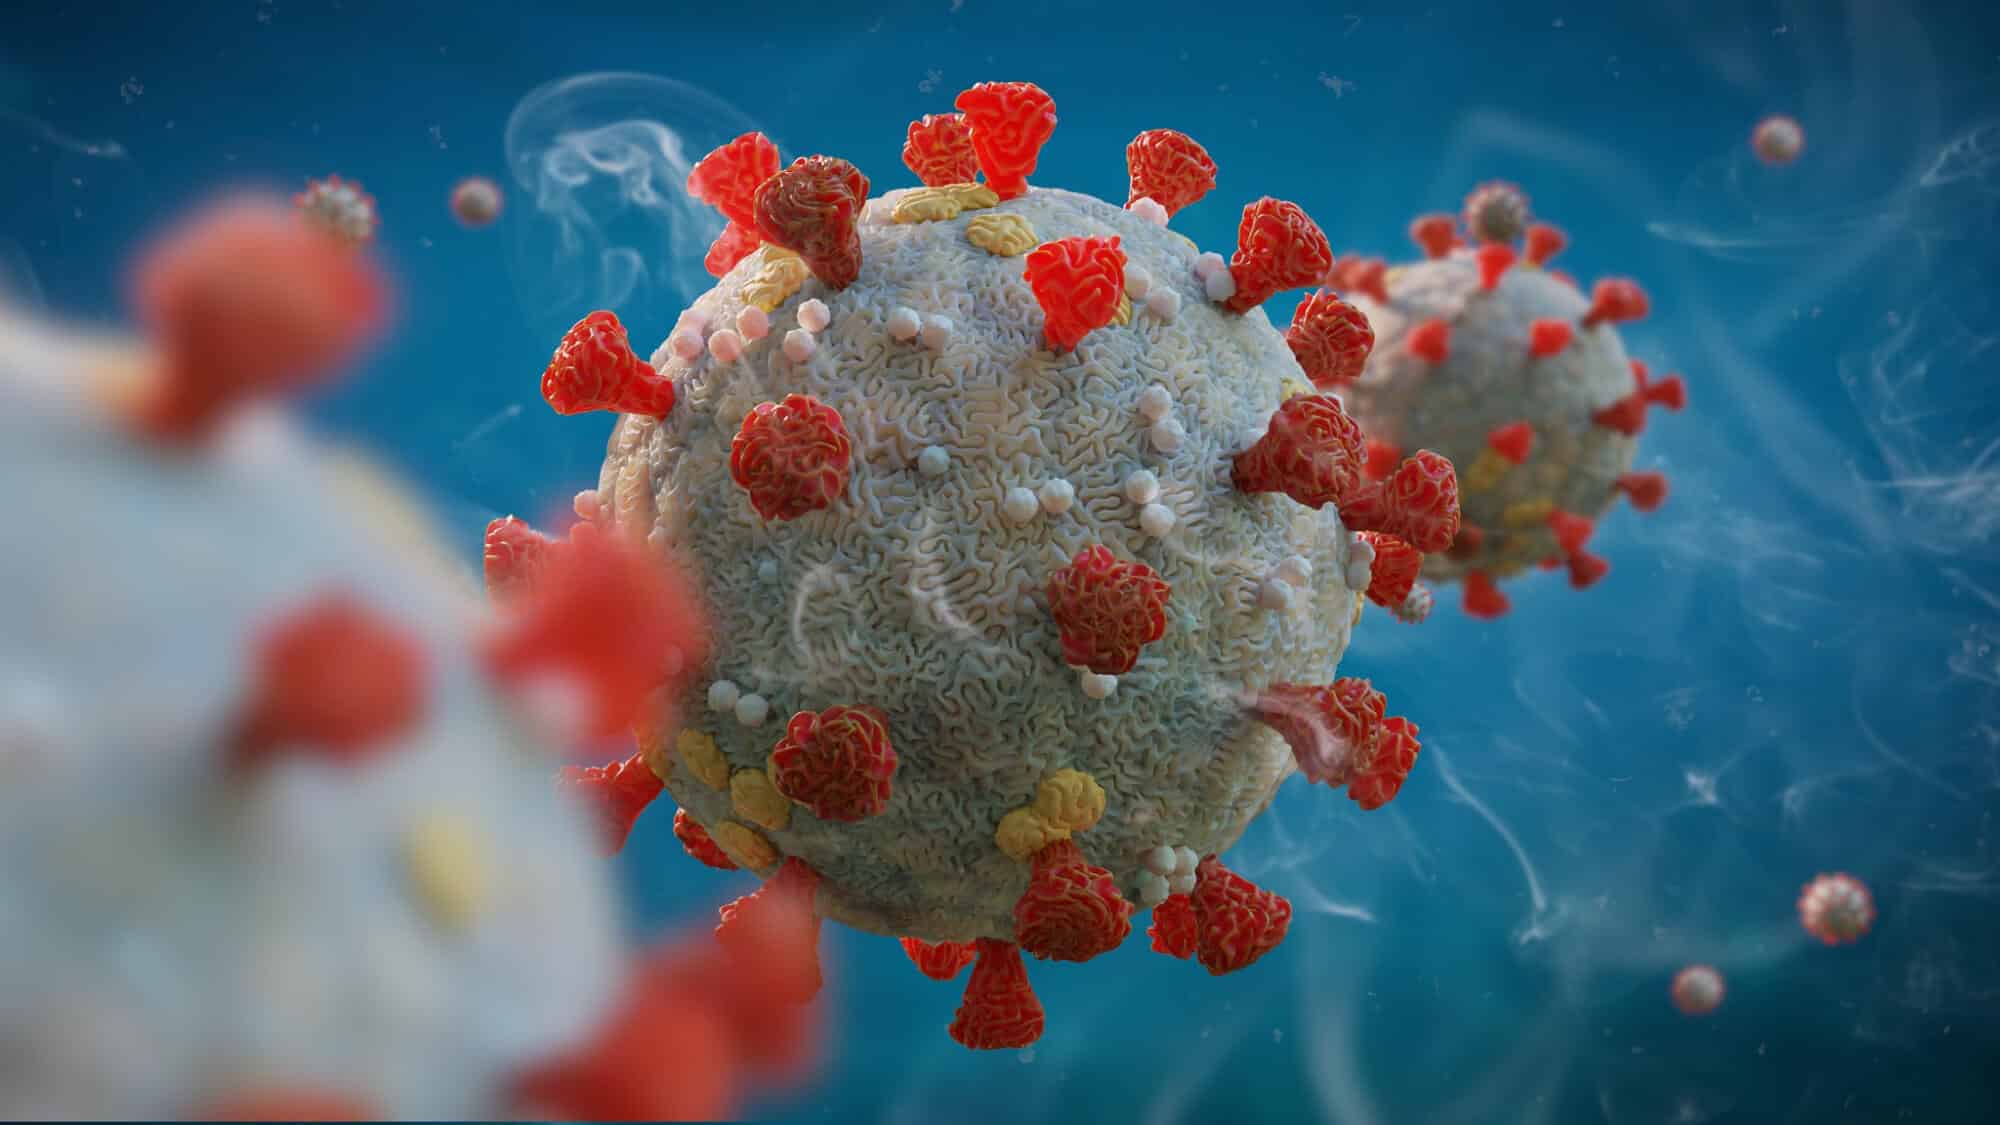 Featured image for “Choate’s Coronavirus Response Plan”